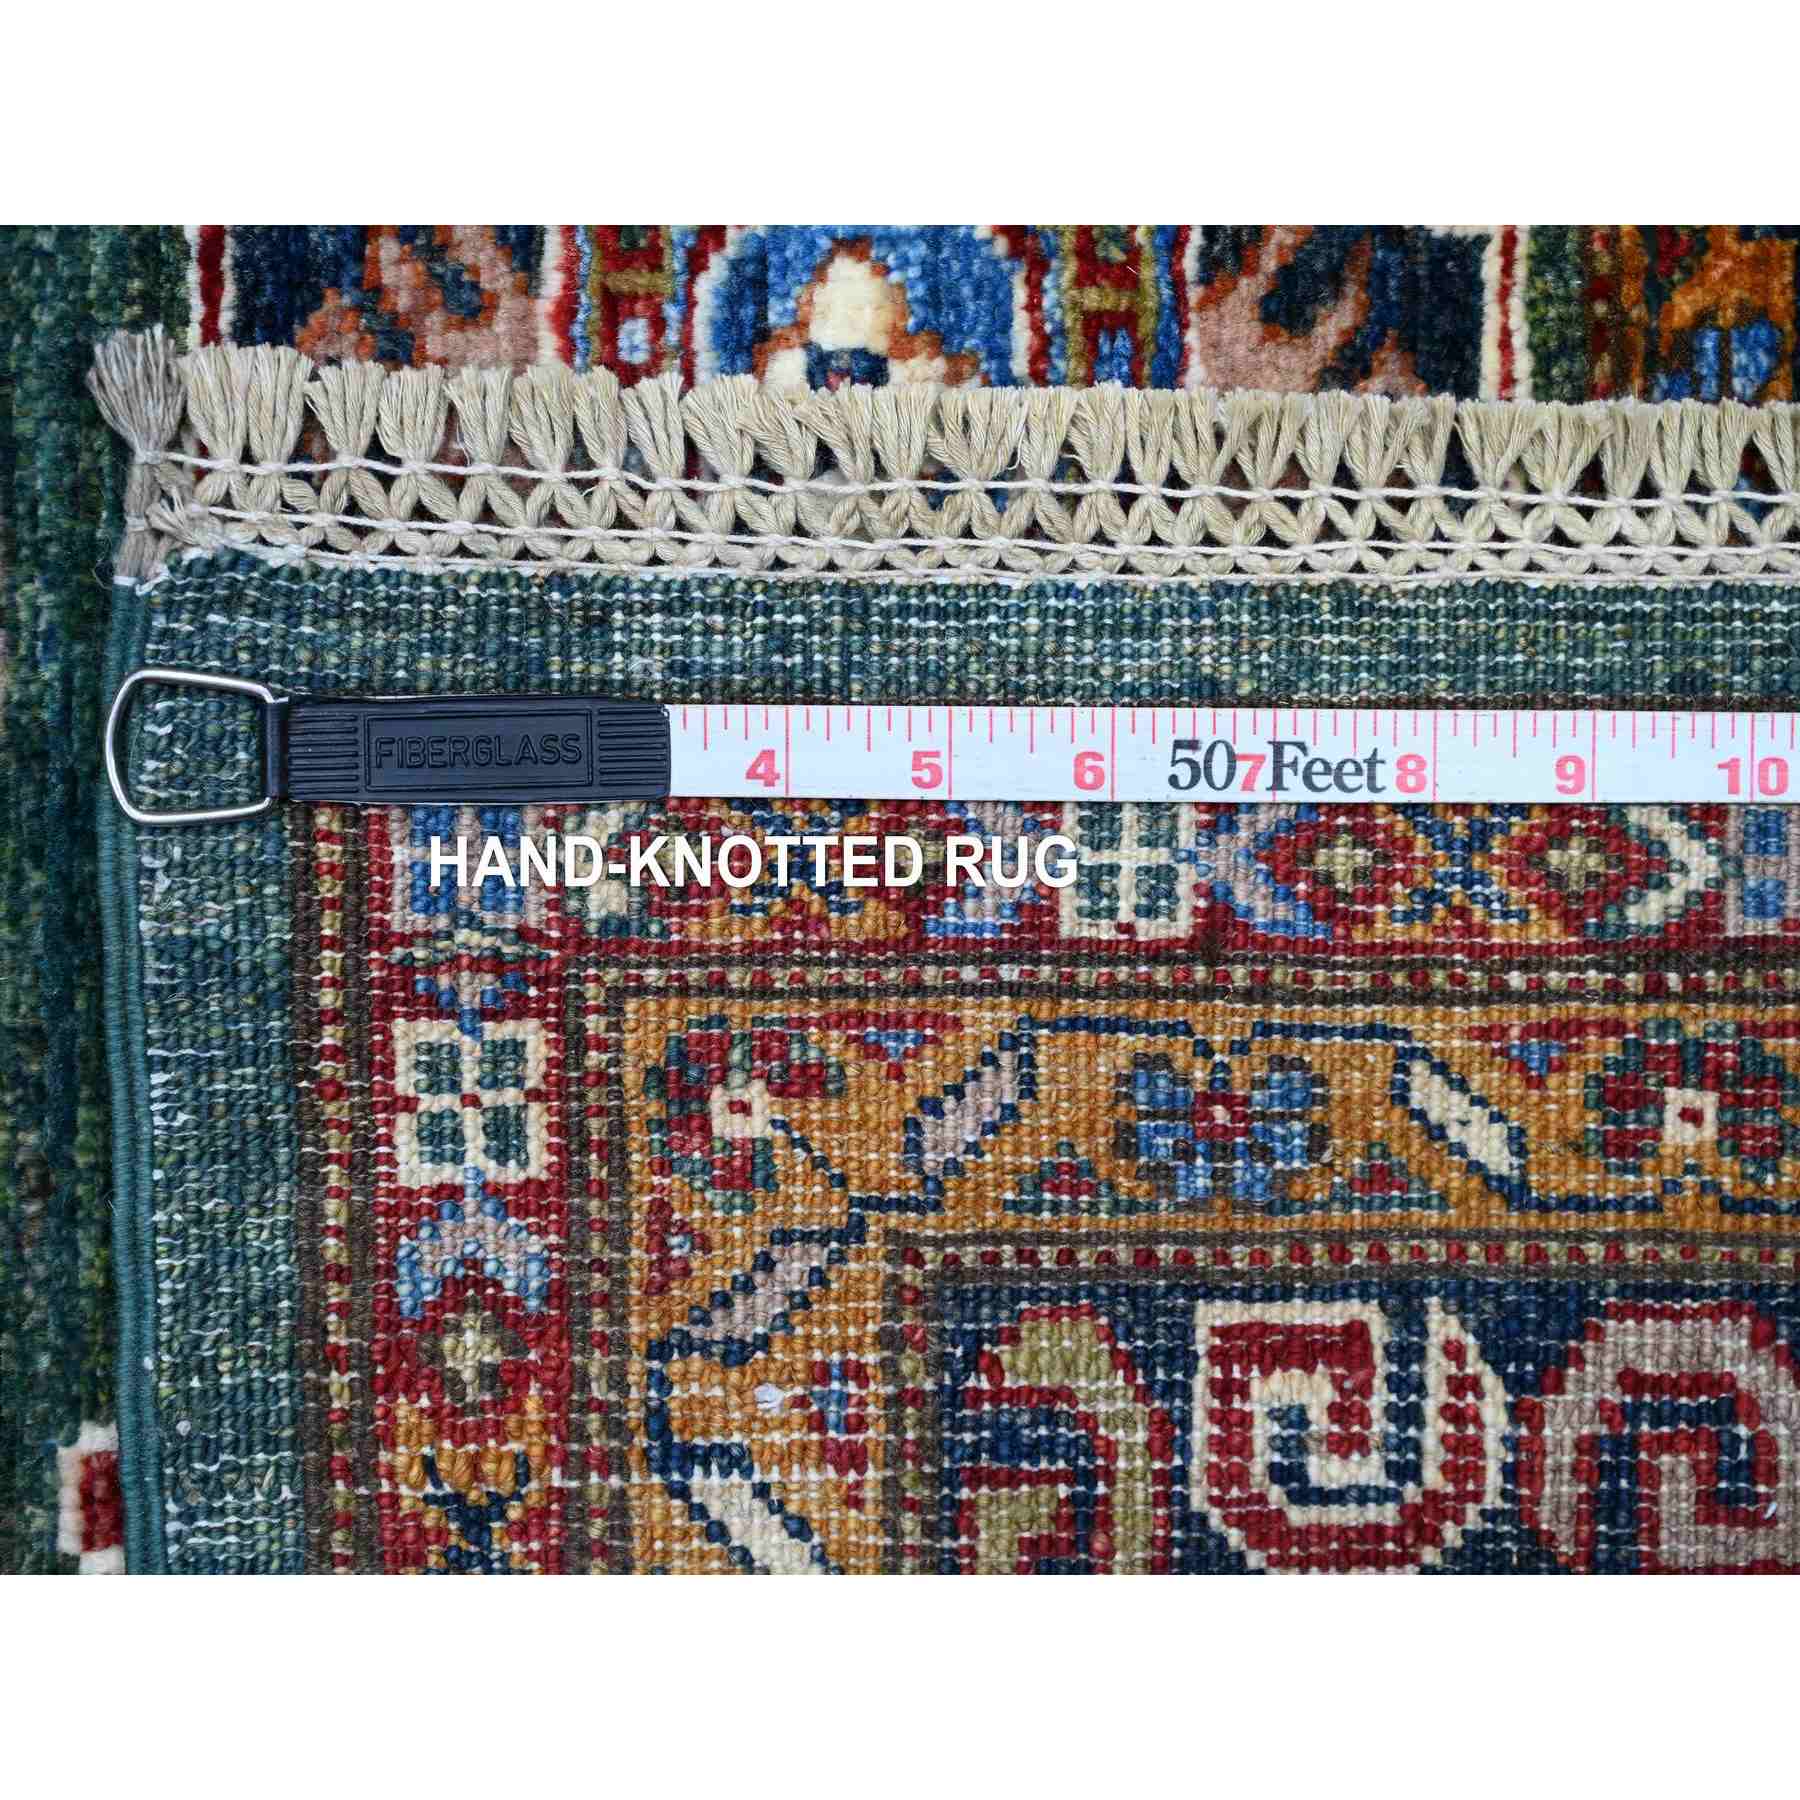 Kazak-Hand-Knotted-Rug-447105